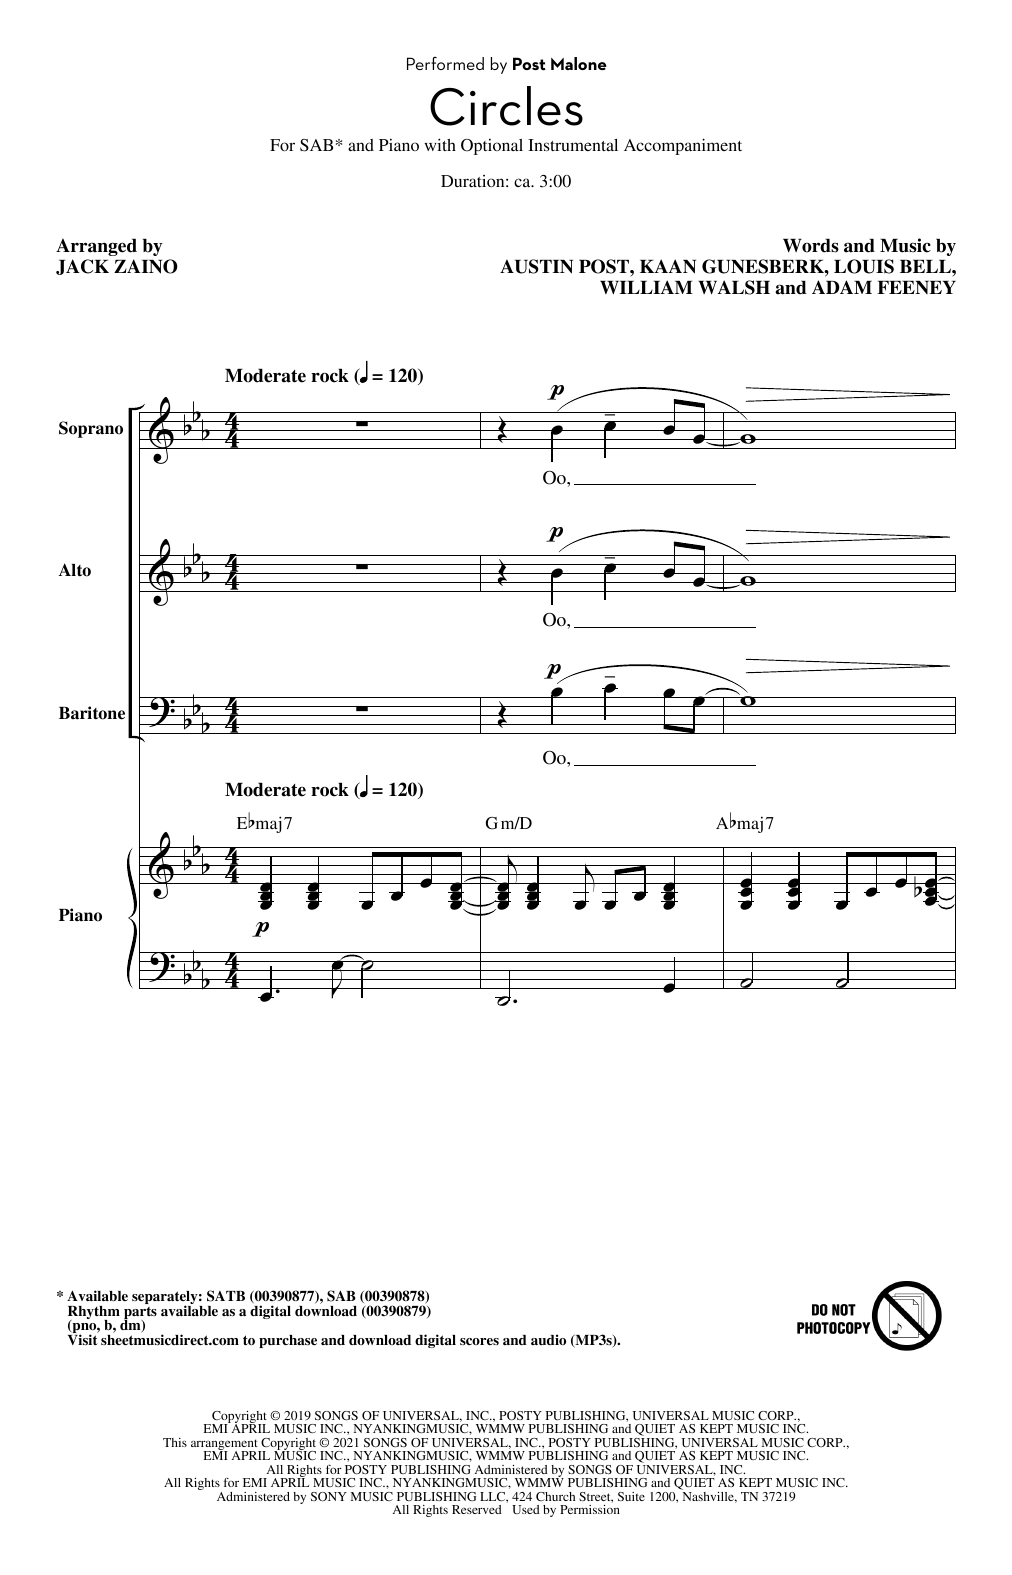 Post Malone Circles (arr. Jack Zaino) Sheet Music Notes & Chords for SAB Choir - Download or Print PDF